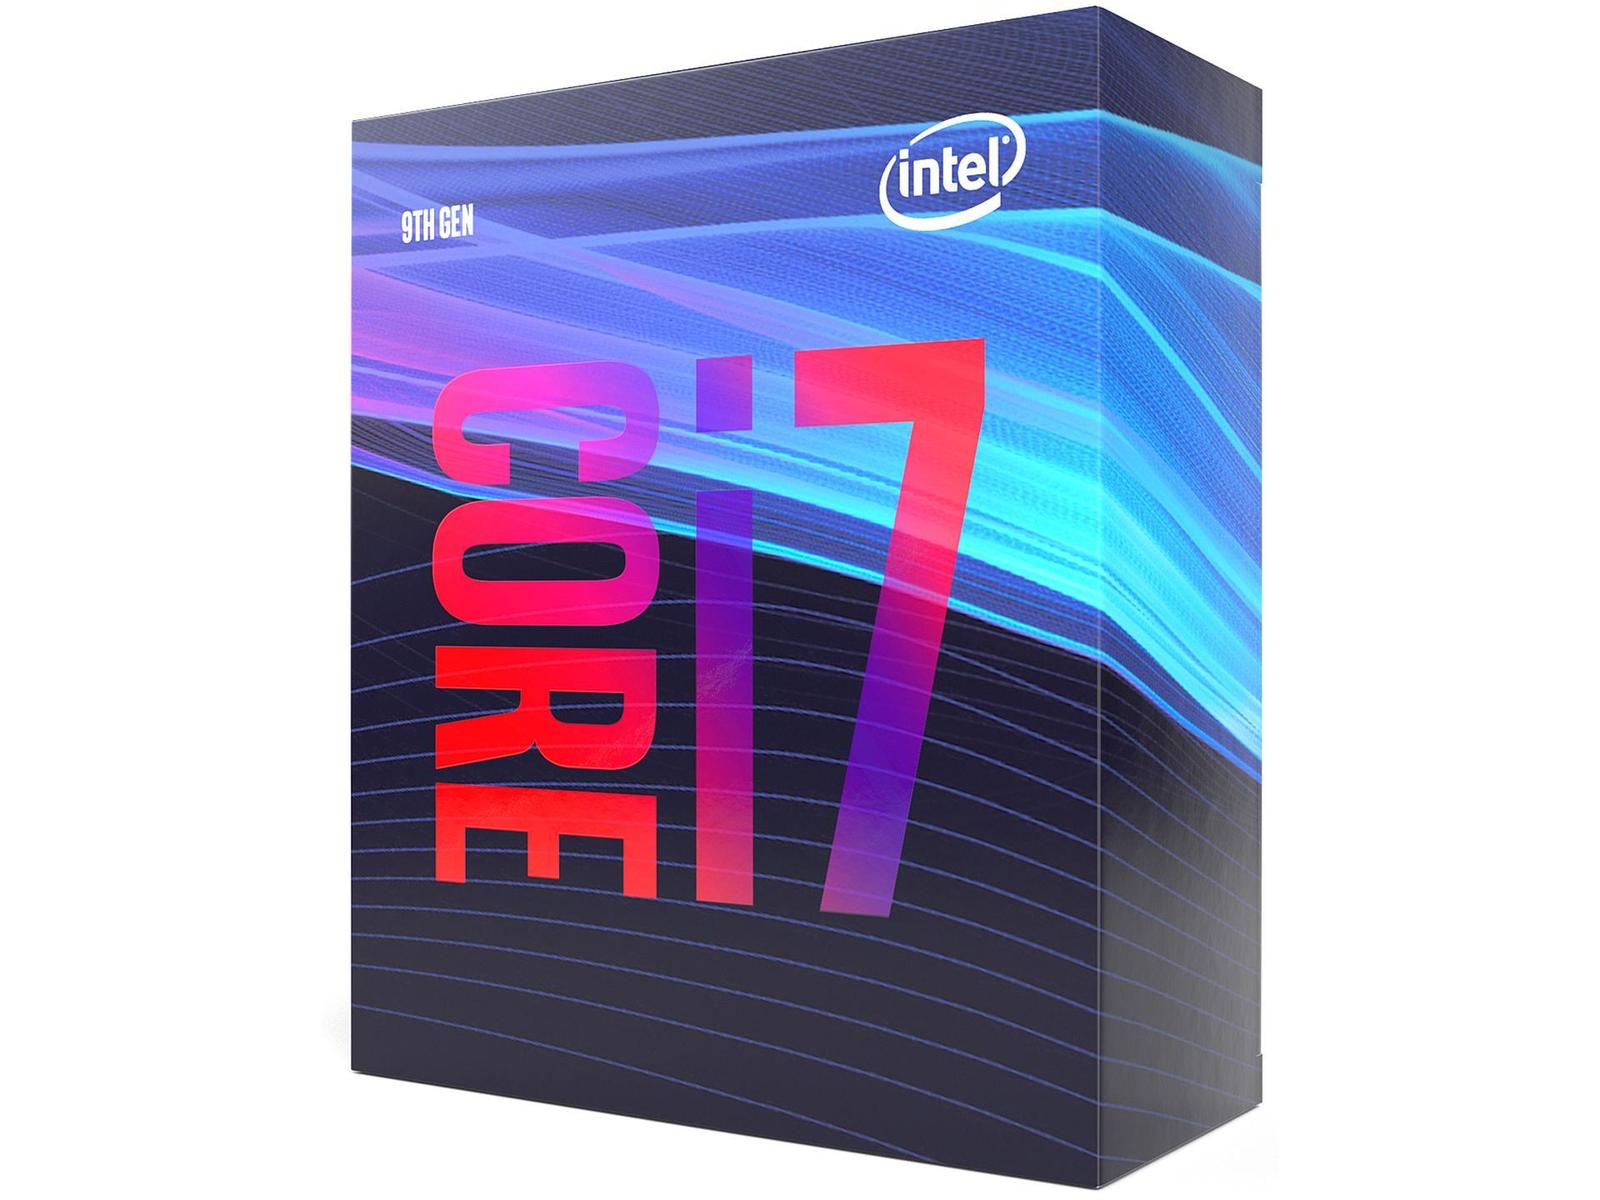 Intel Core i7-9700 3GHz Coffee Lake 12MB LGA1151 CPU Desktop Processor Boxed